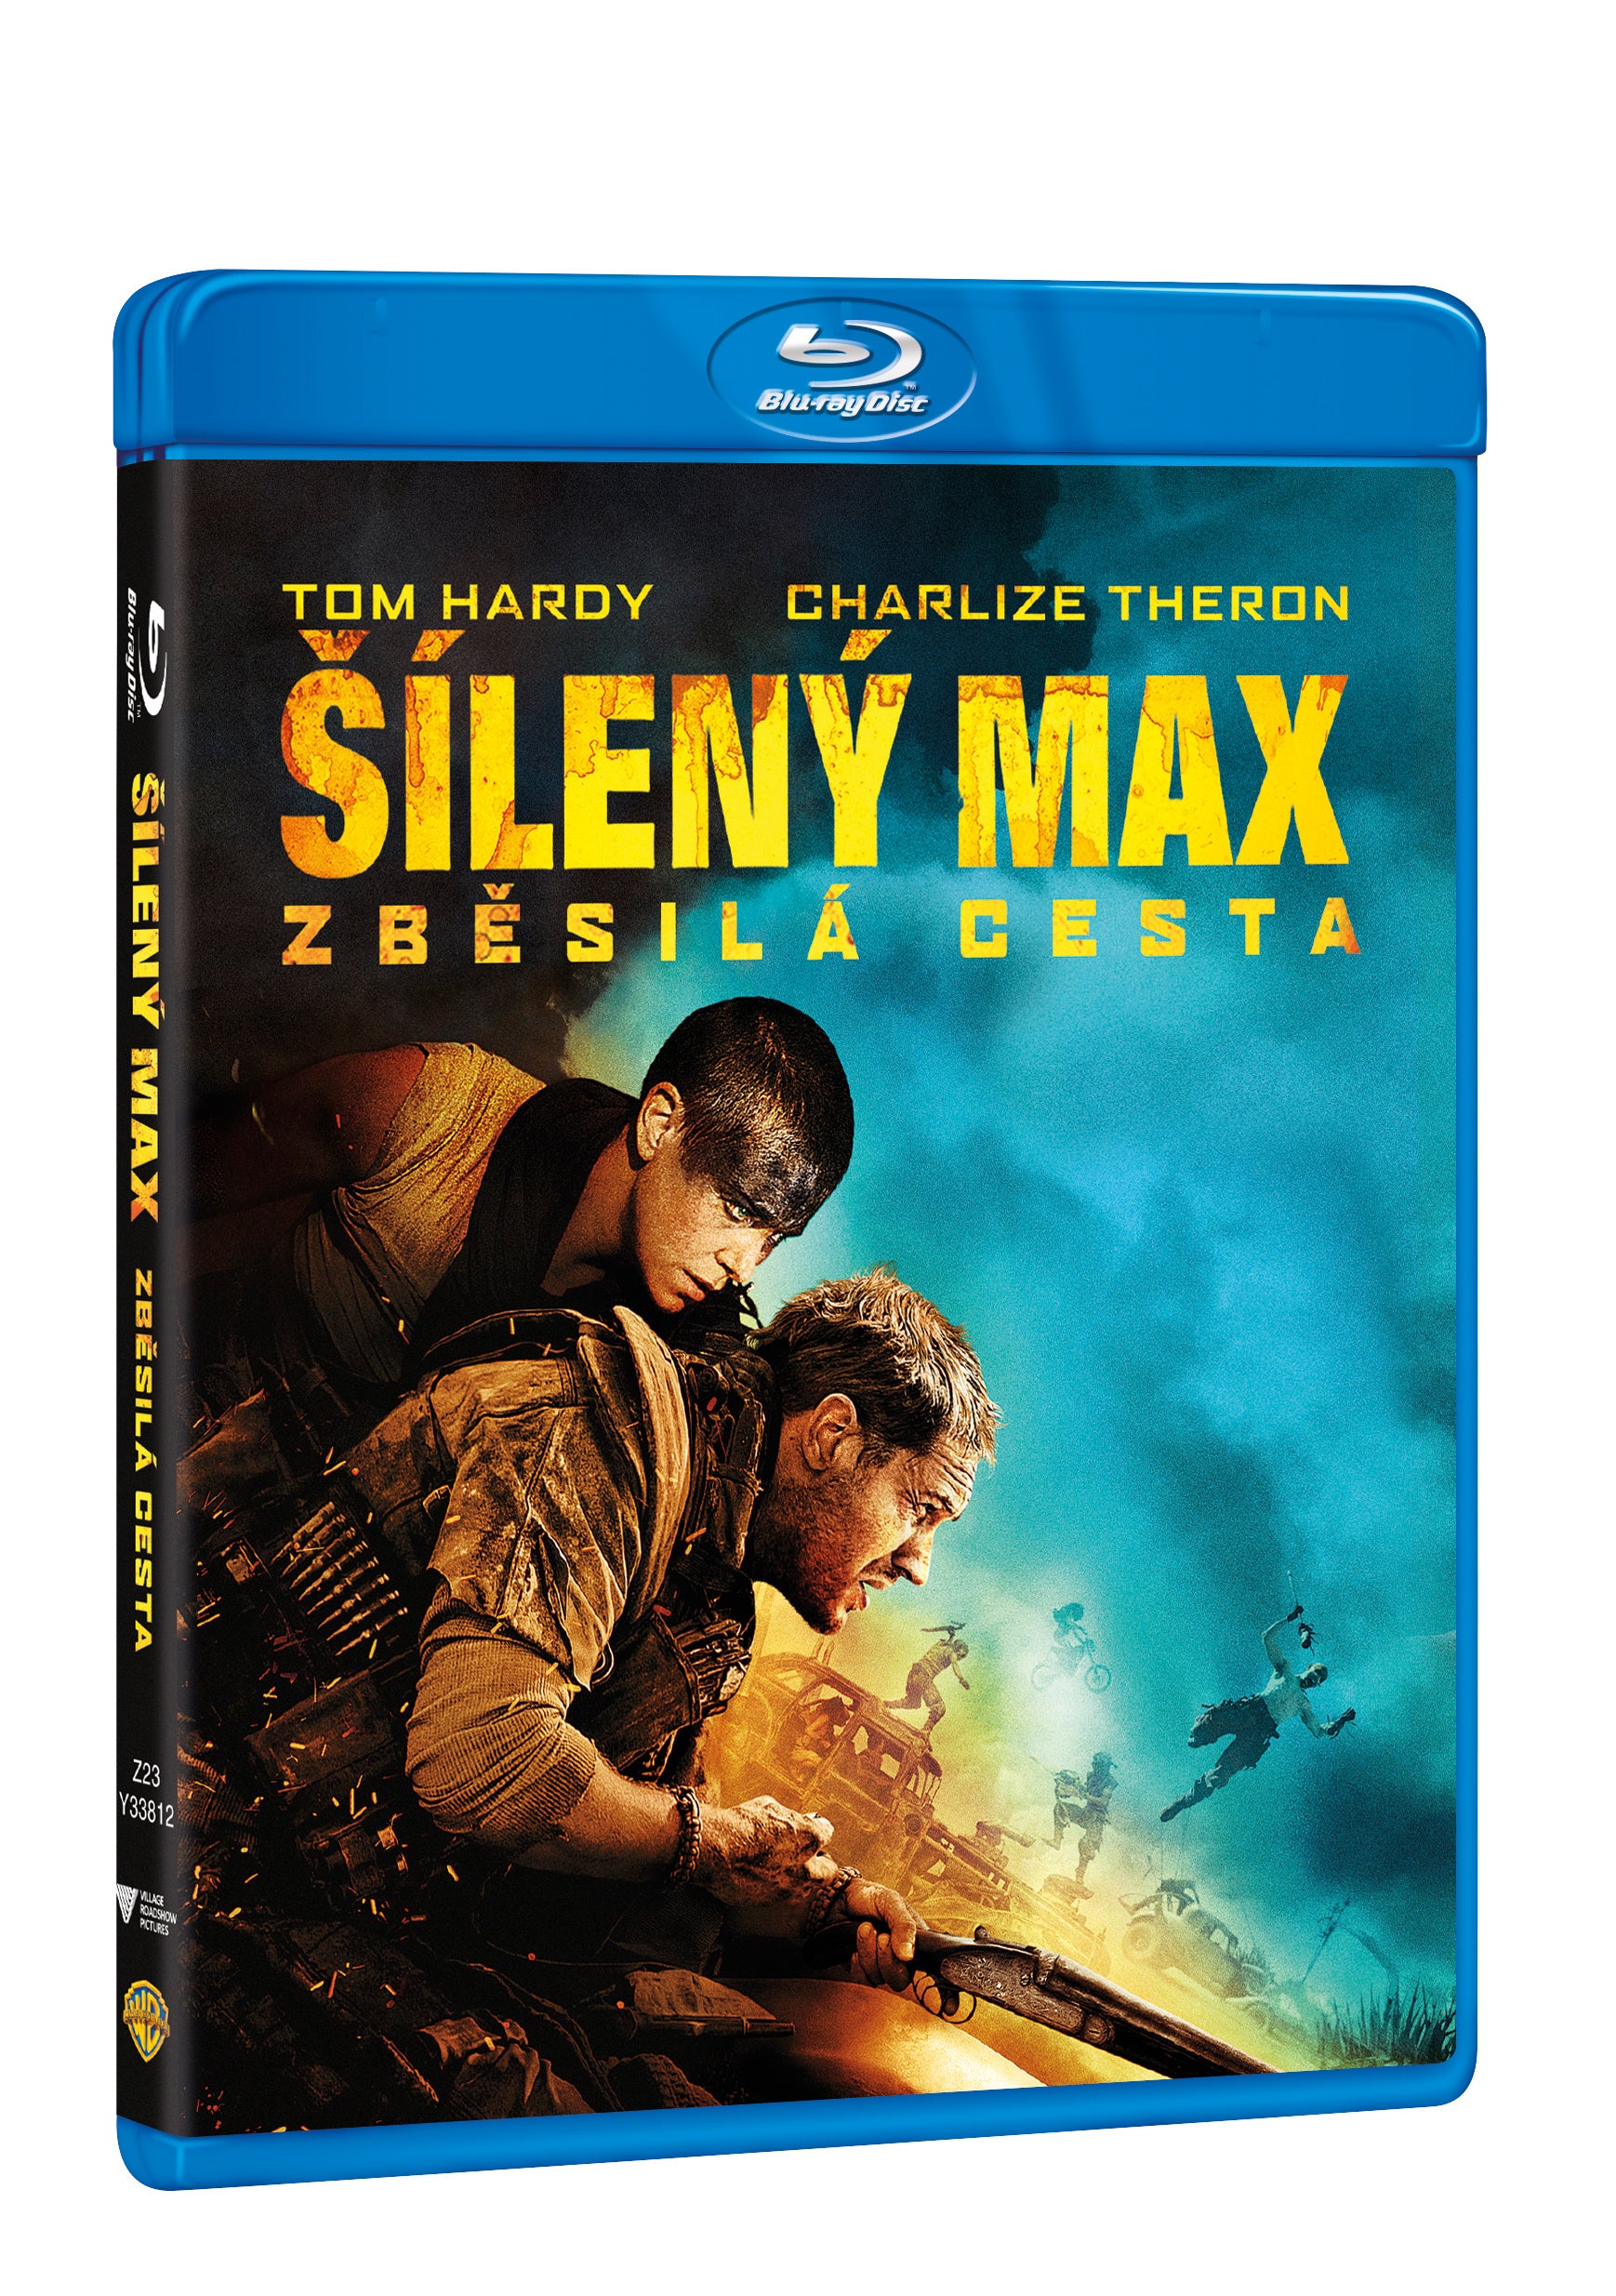 Sileny Max: Zbesila cesta BD / Mad Max: Fury Road - Czech version